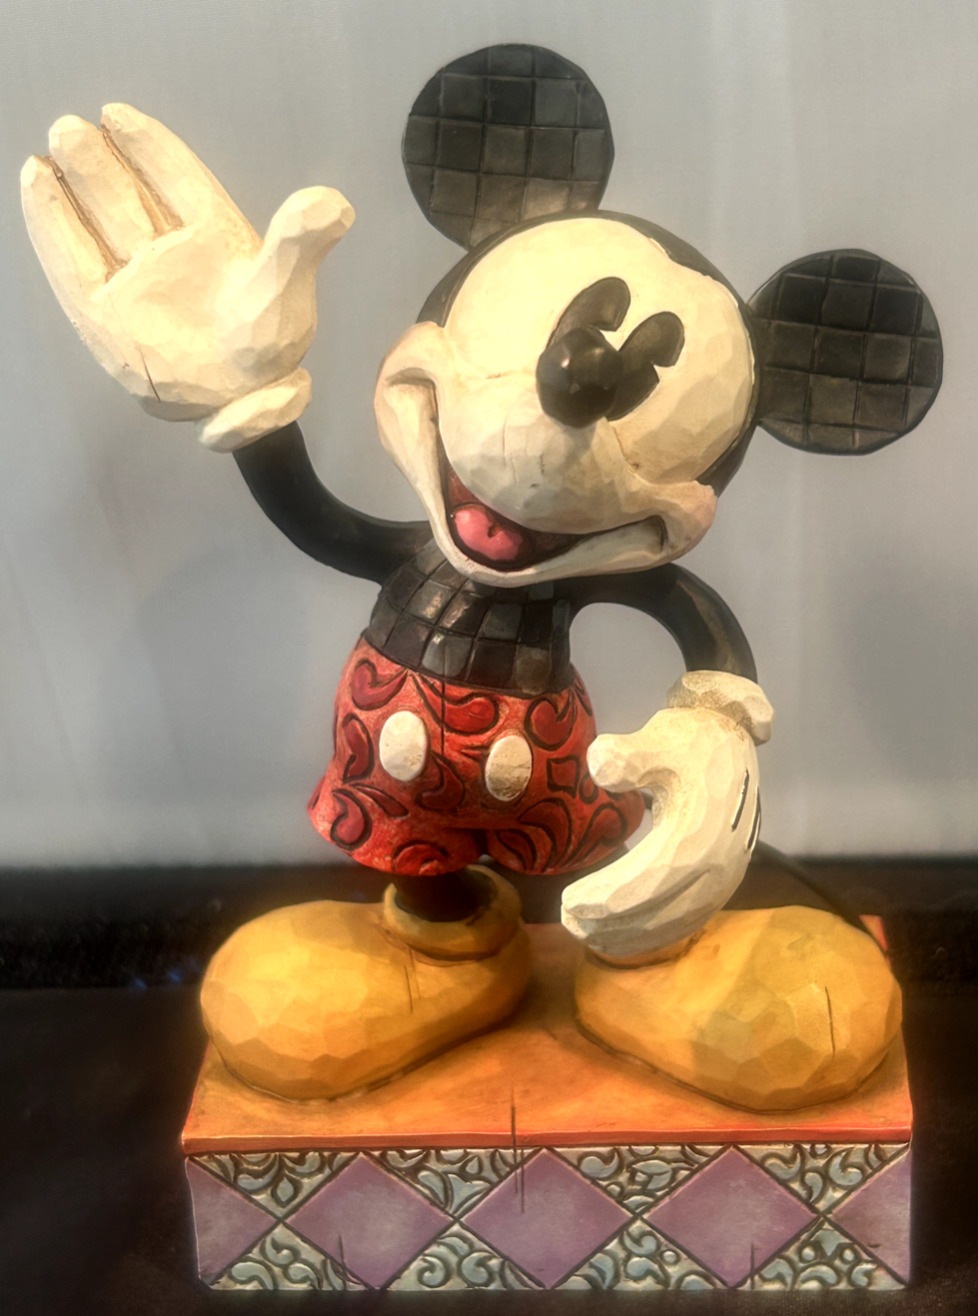 2014 Walt Disney Showcase “Your Pal Mickey” #4008080 Jim Shore Design By Enesco